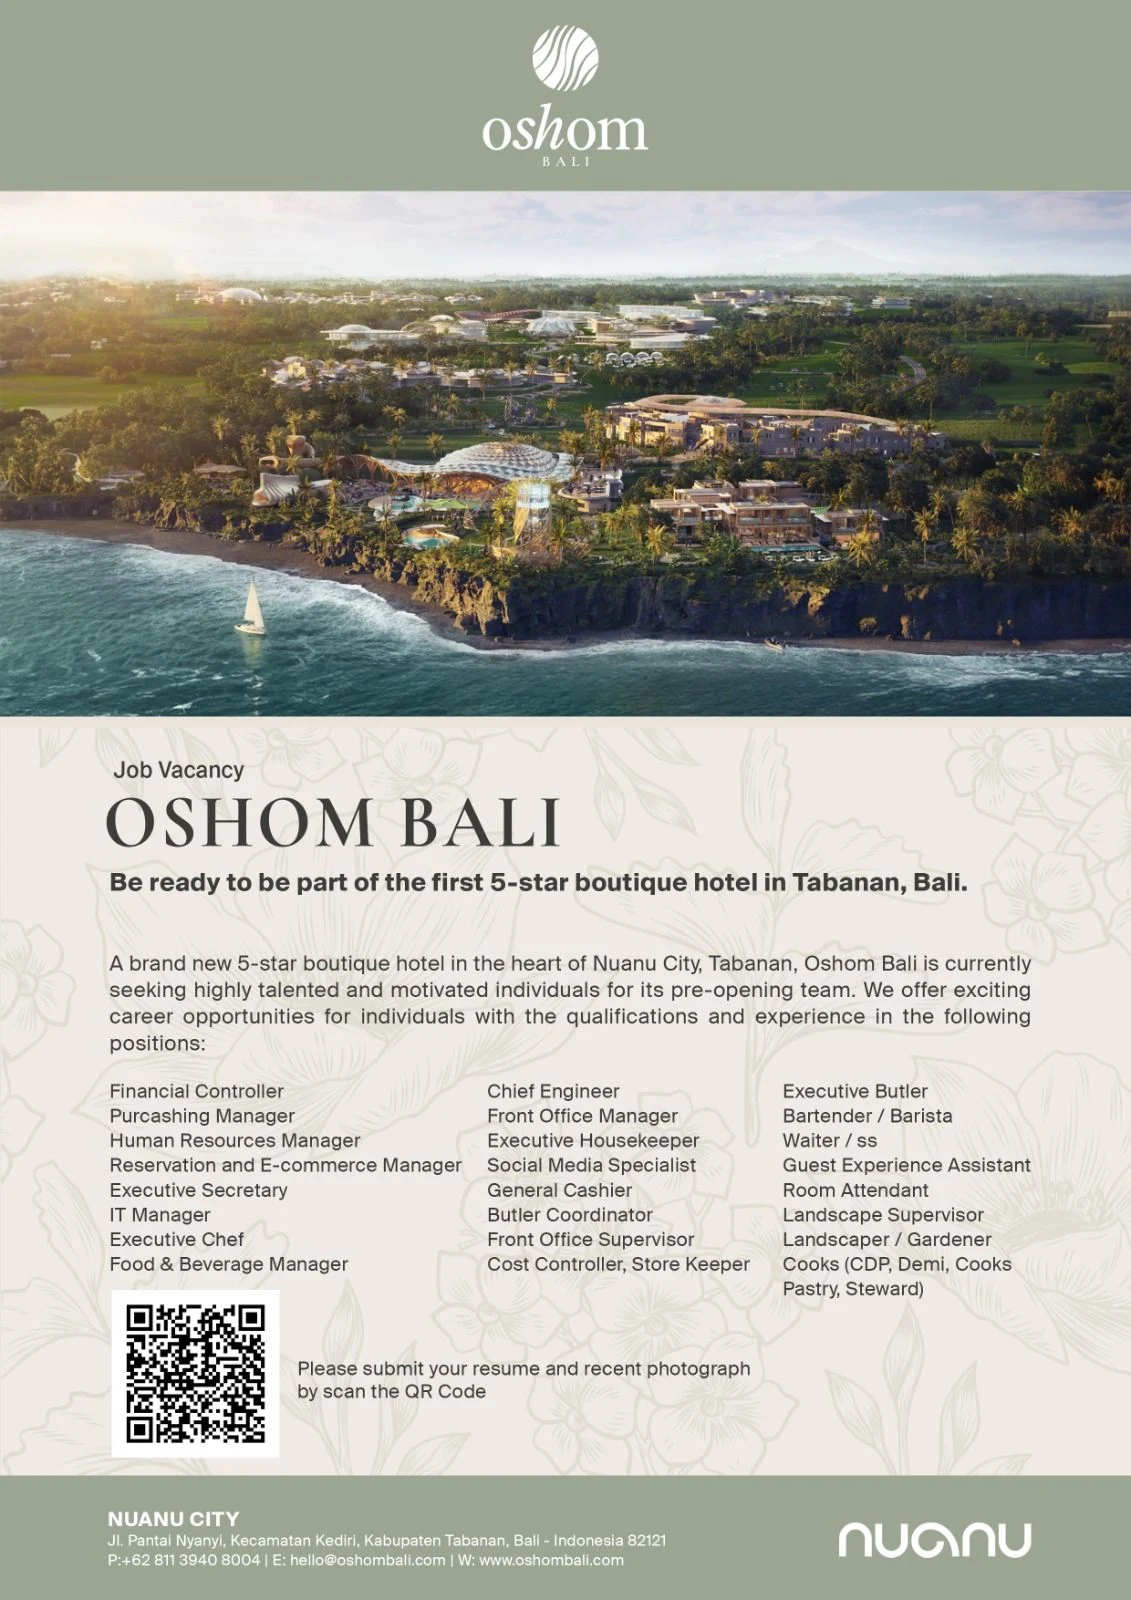 Oshom Bali